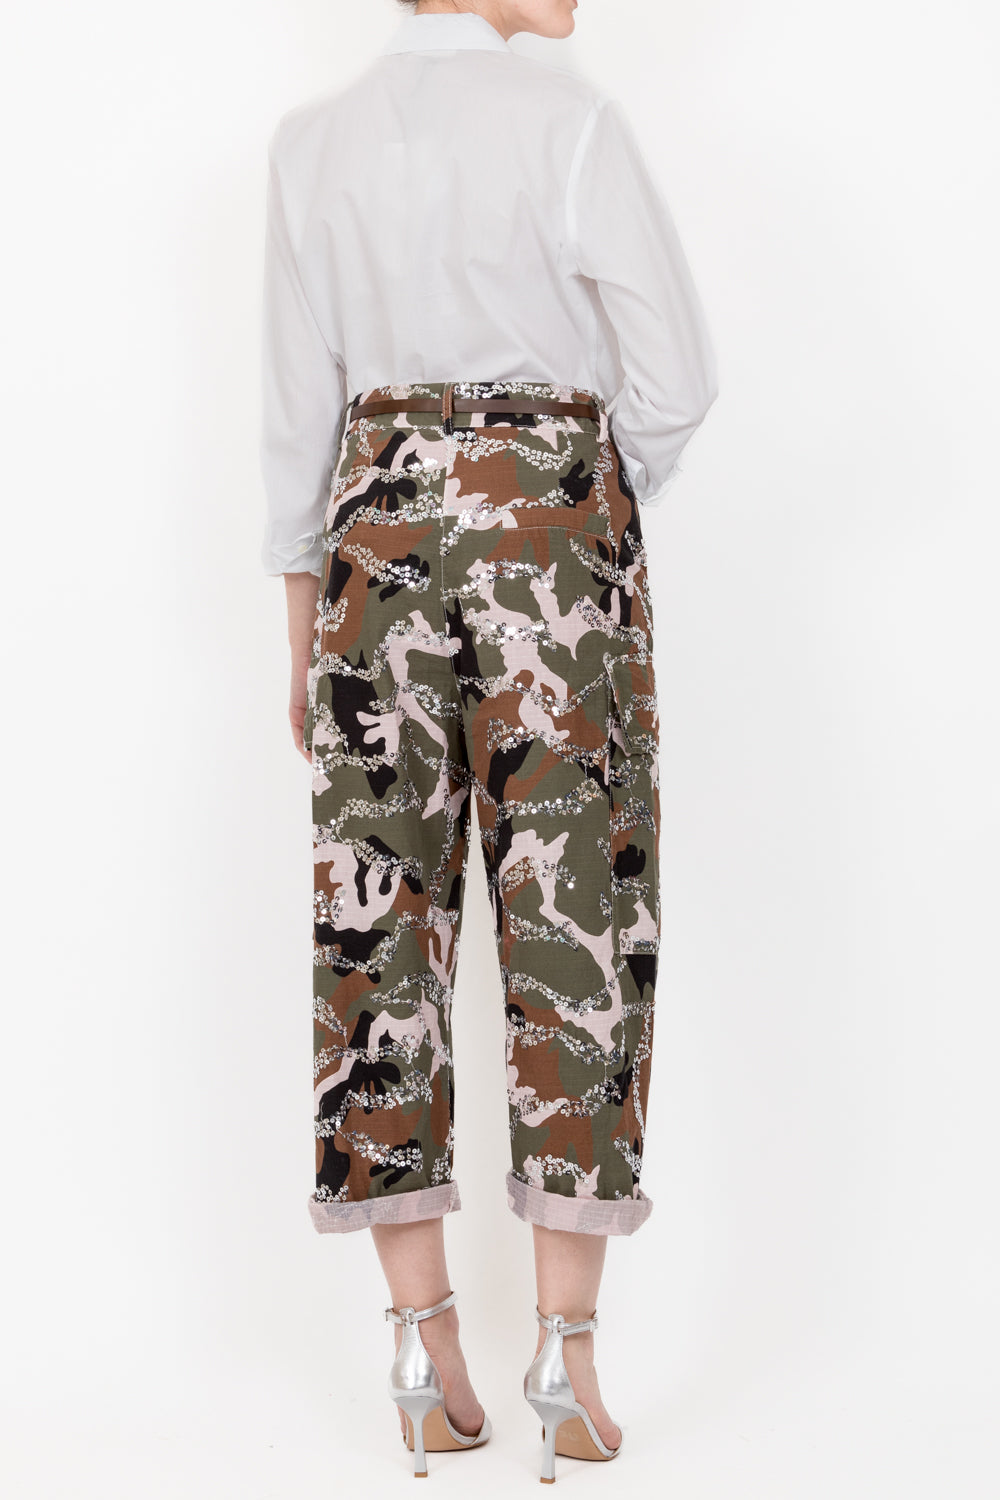 Tensione In - Pantalone cargo camouflage con paillettes Art. P20378